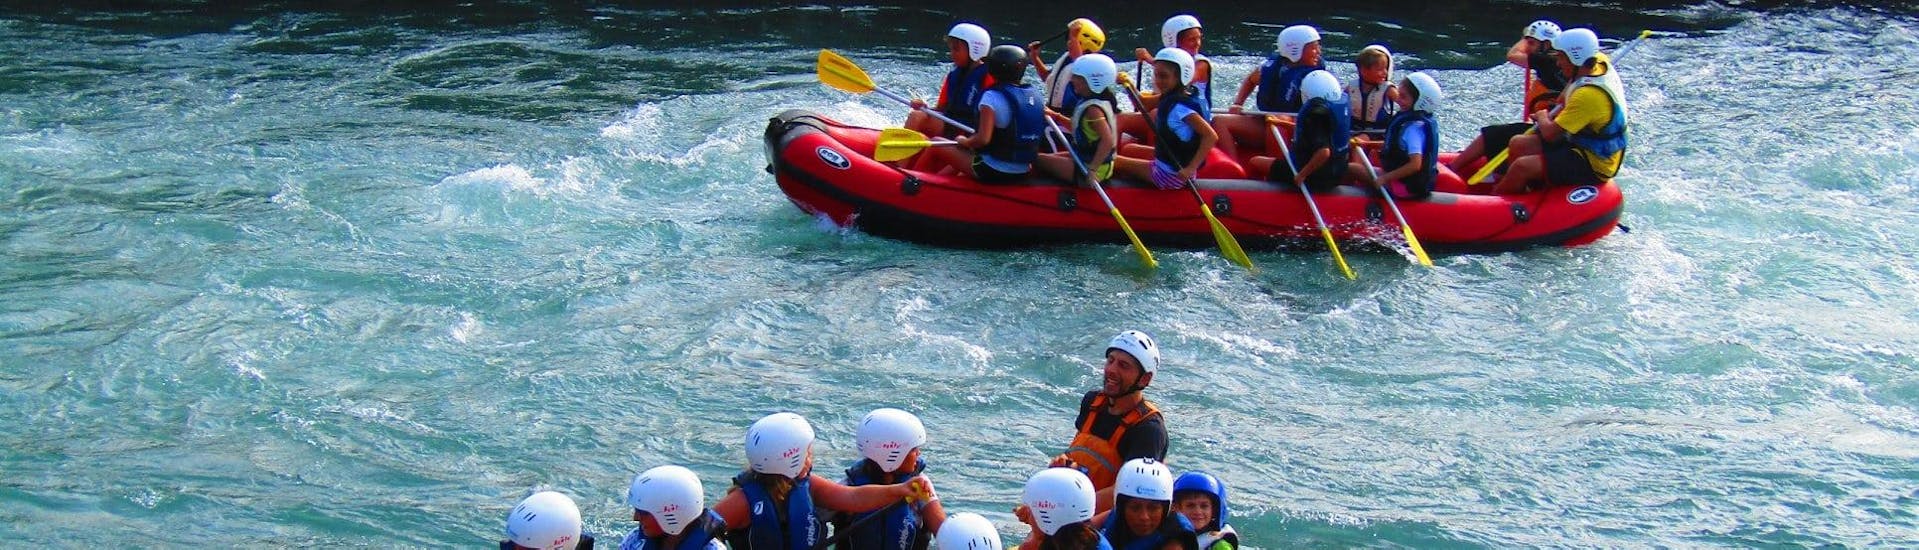 Rafting on the Gari River - Super Tour.